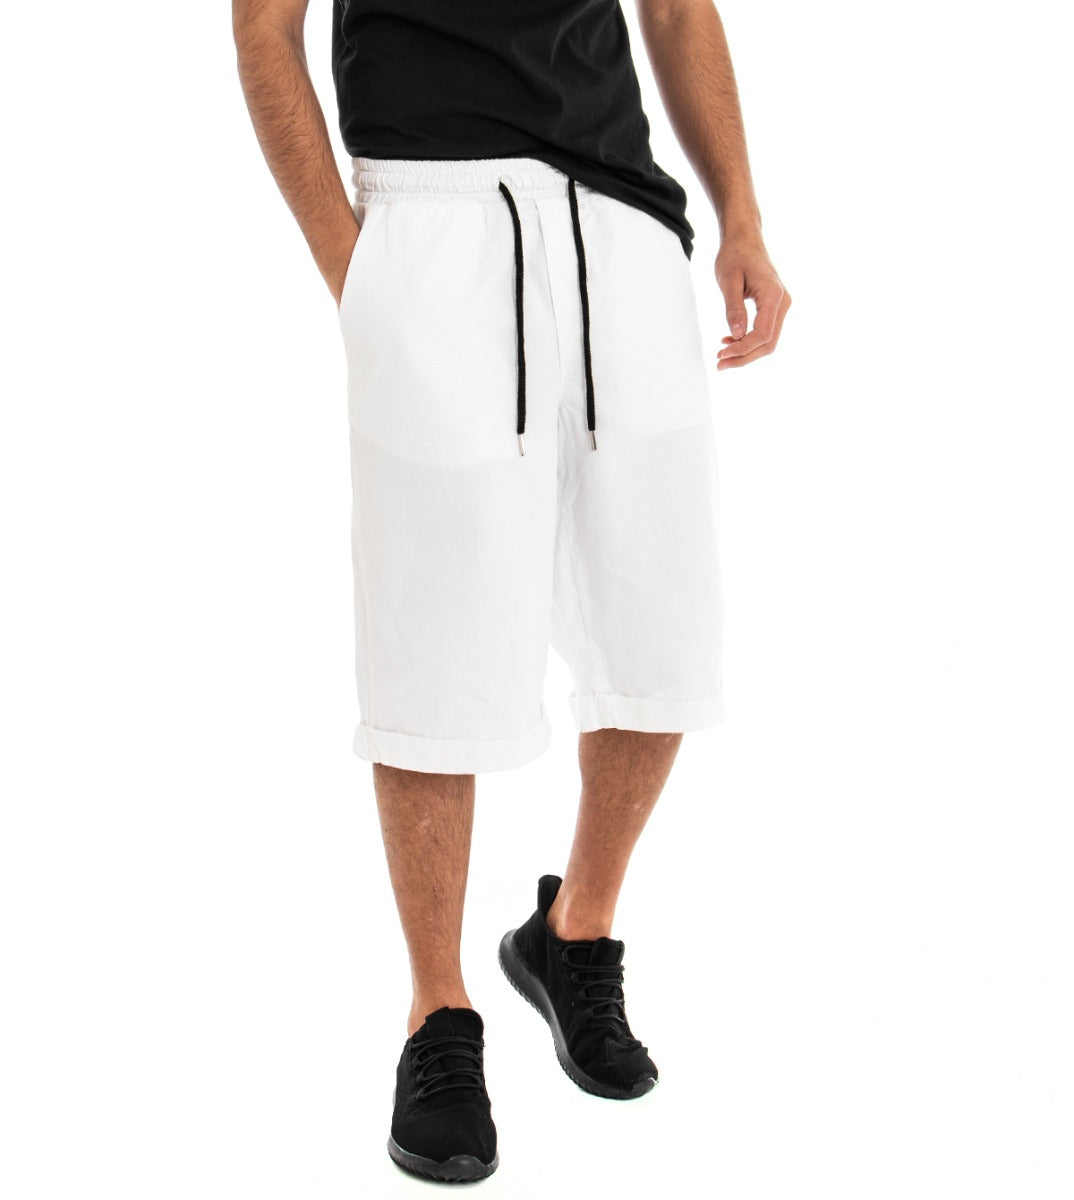 Bermuda Men's Shorts America Pocket Elastic White Low Crotch GIOSAL-PC1319A